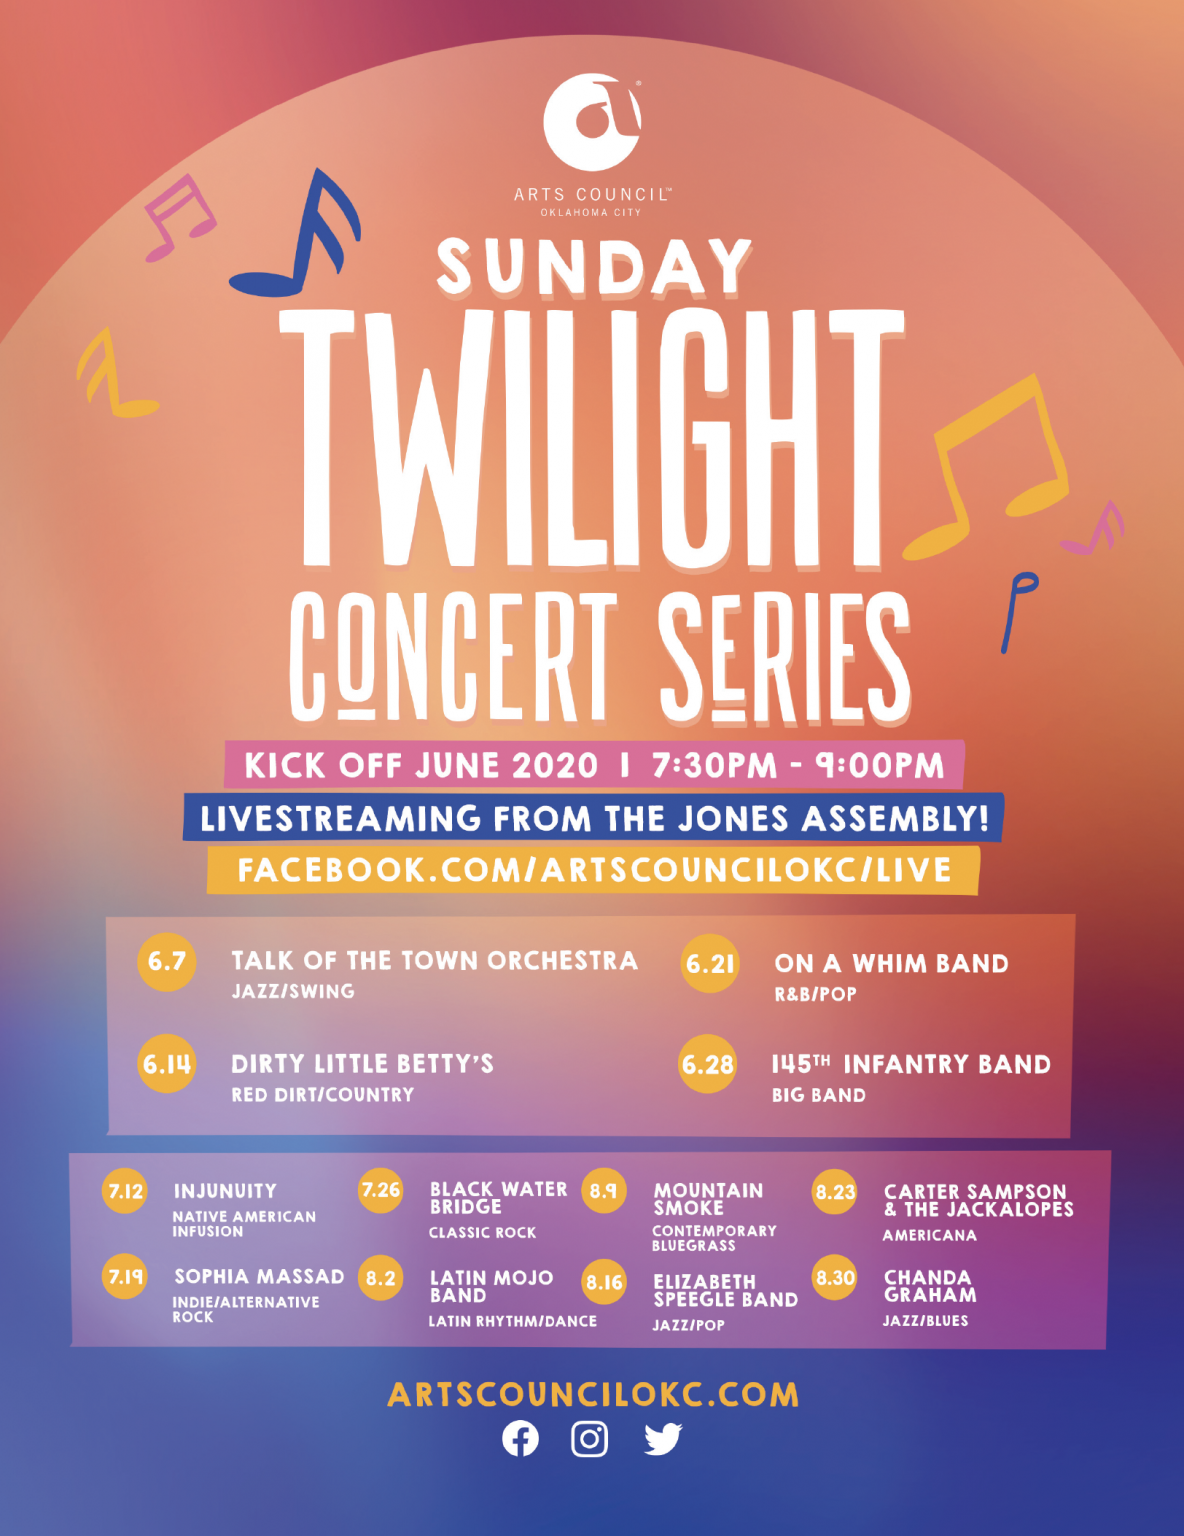 Sunday Twilight Concert Series – Arts Council Oklahoma City